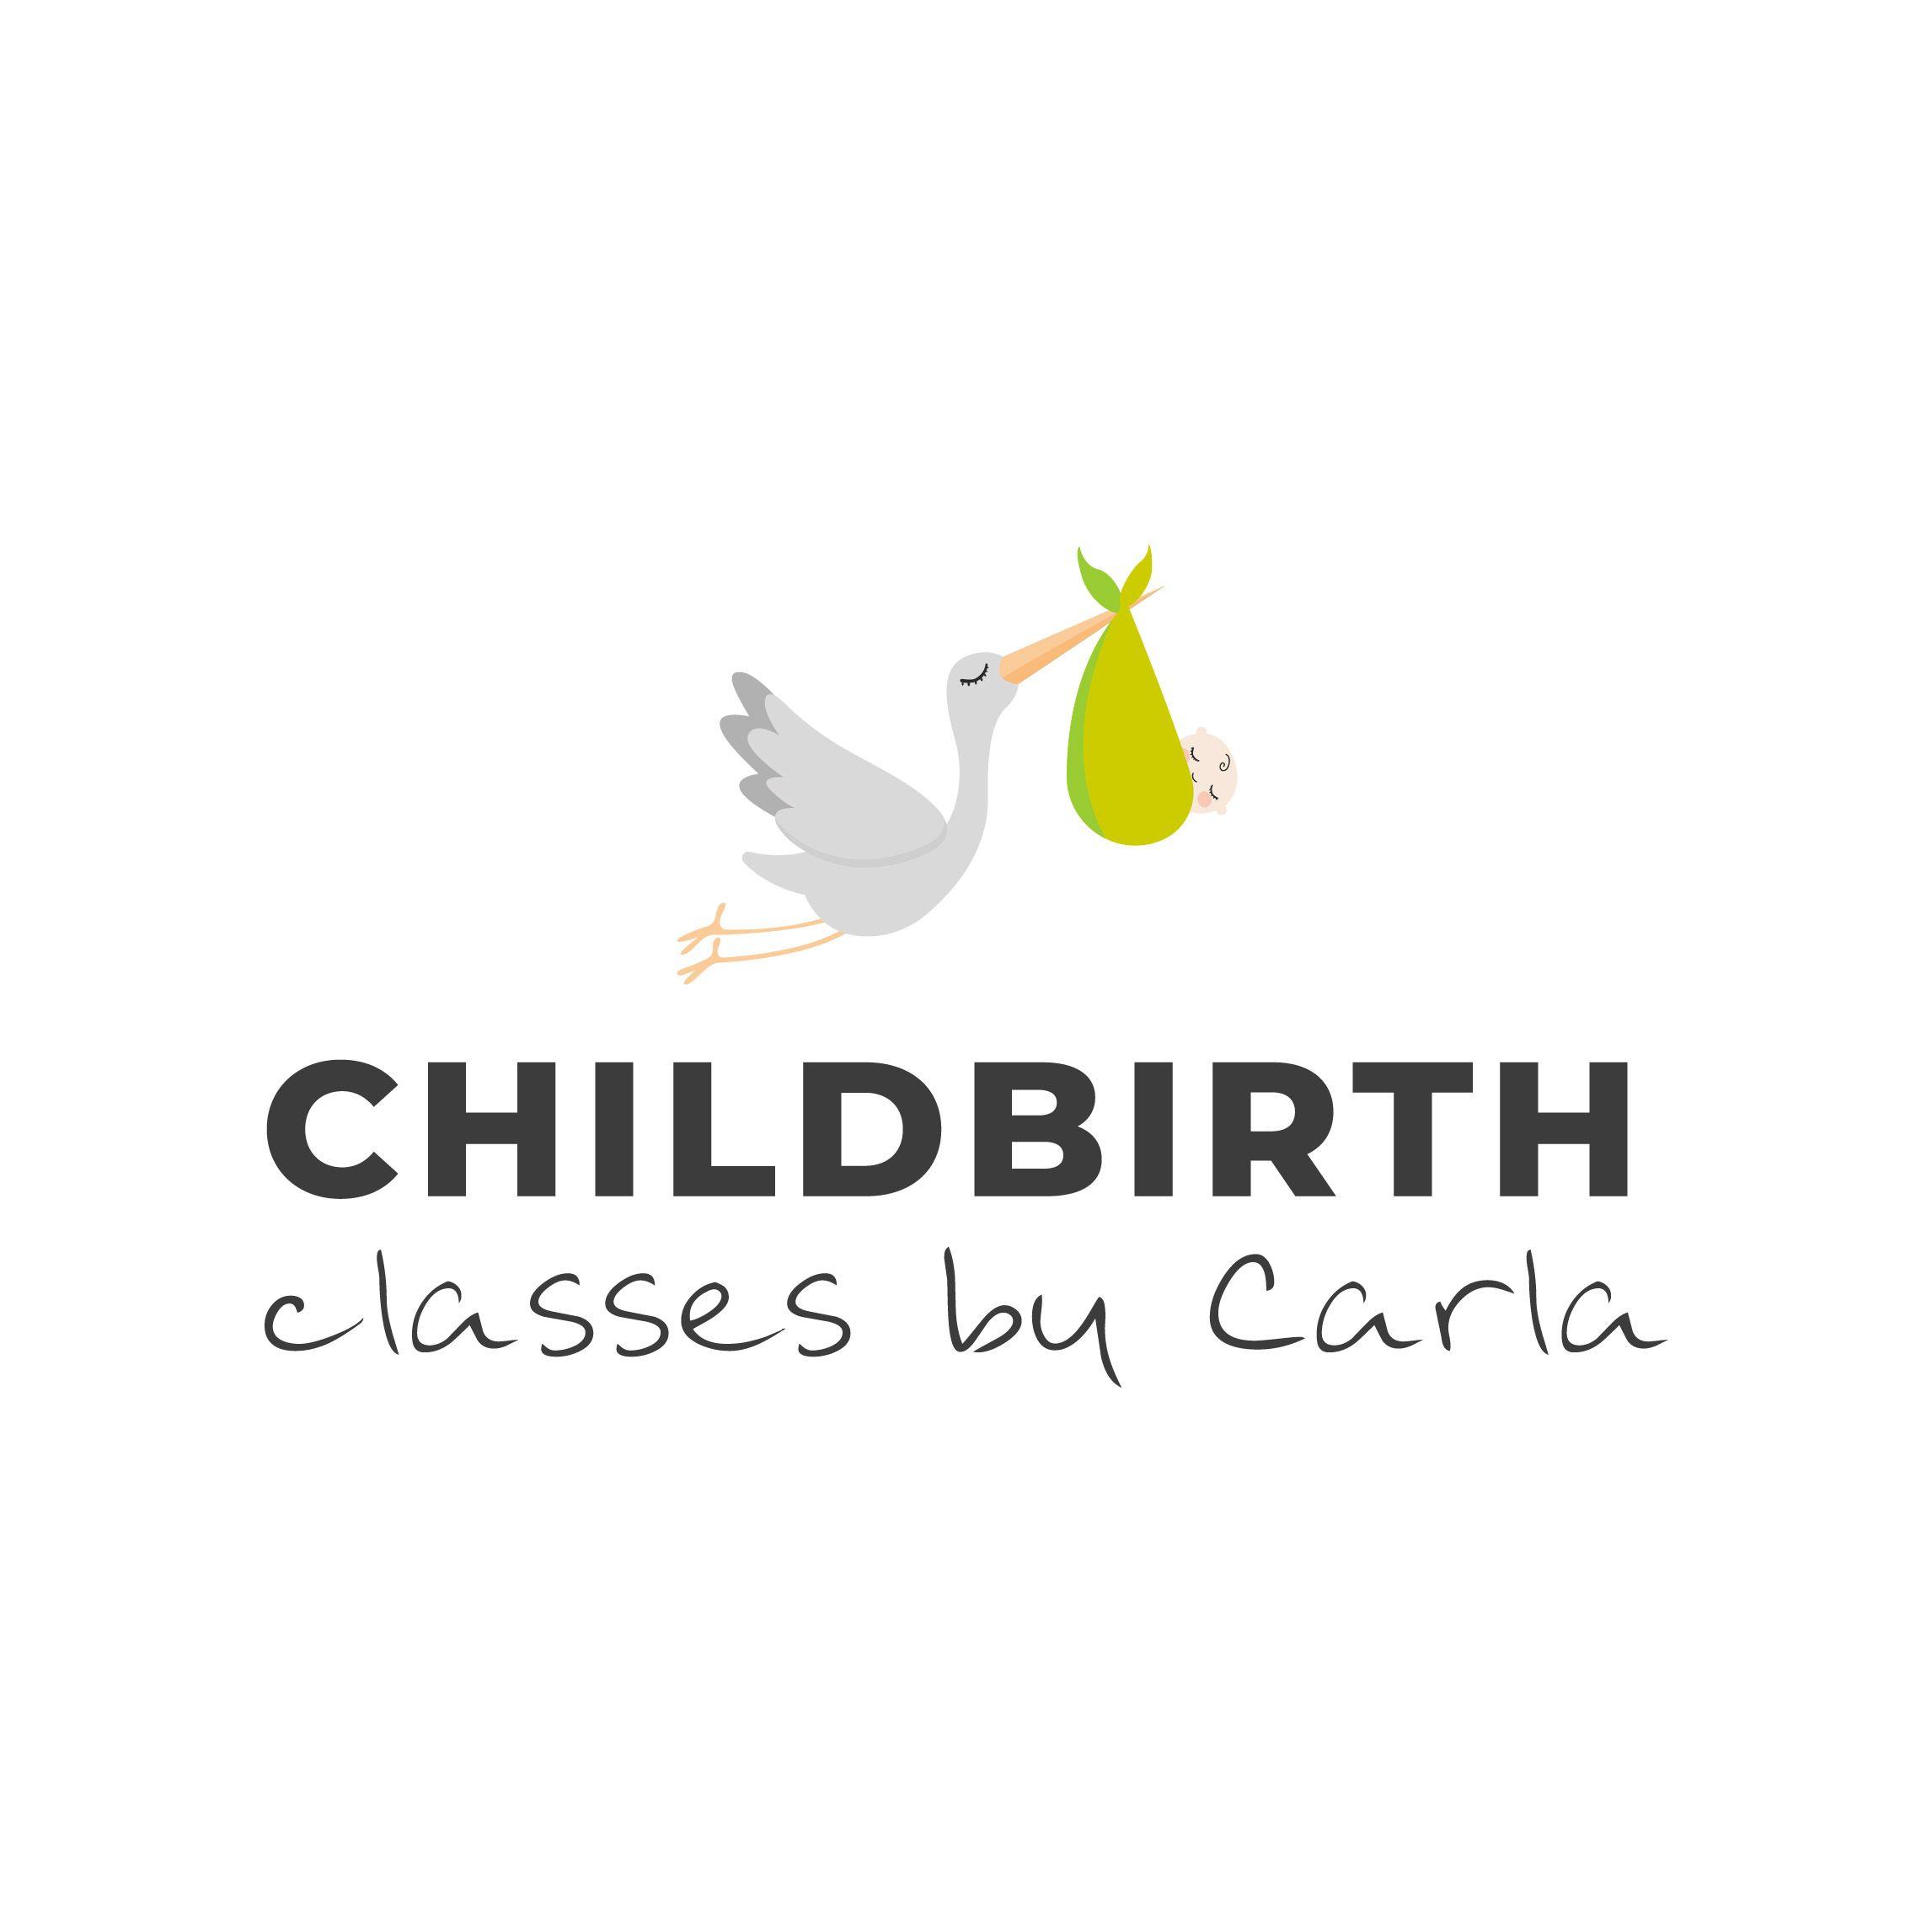 Carla Logo - Childbirth Classes by Carla - Miaraka Marketing - Social Media ...